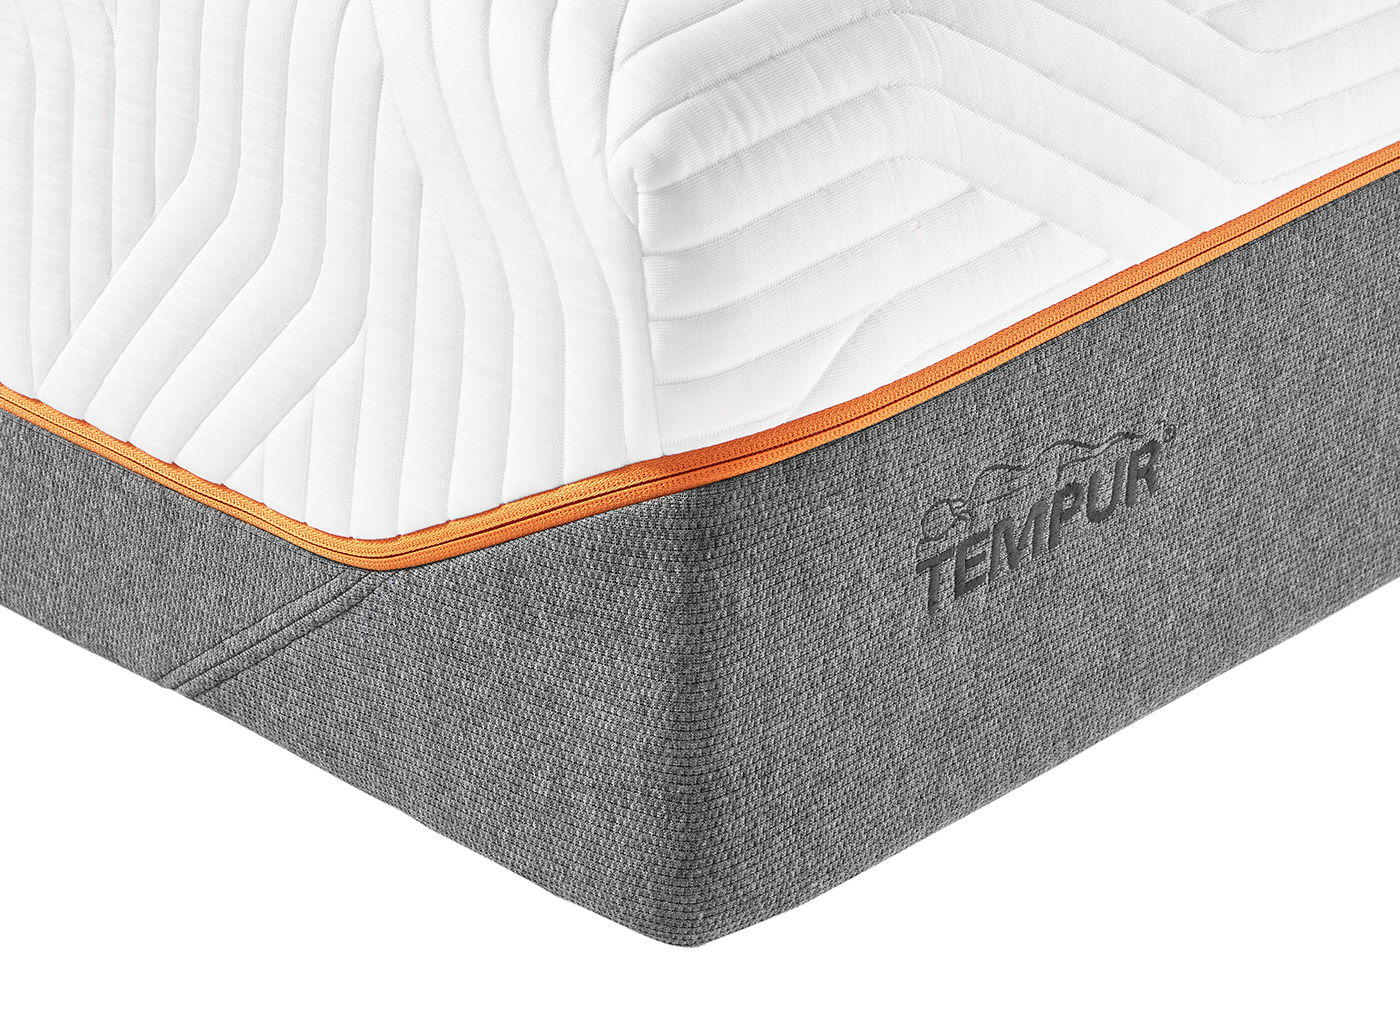 tempur double mattress cover